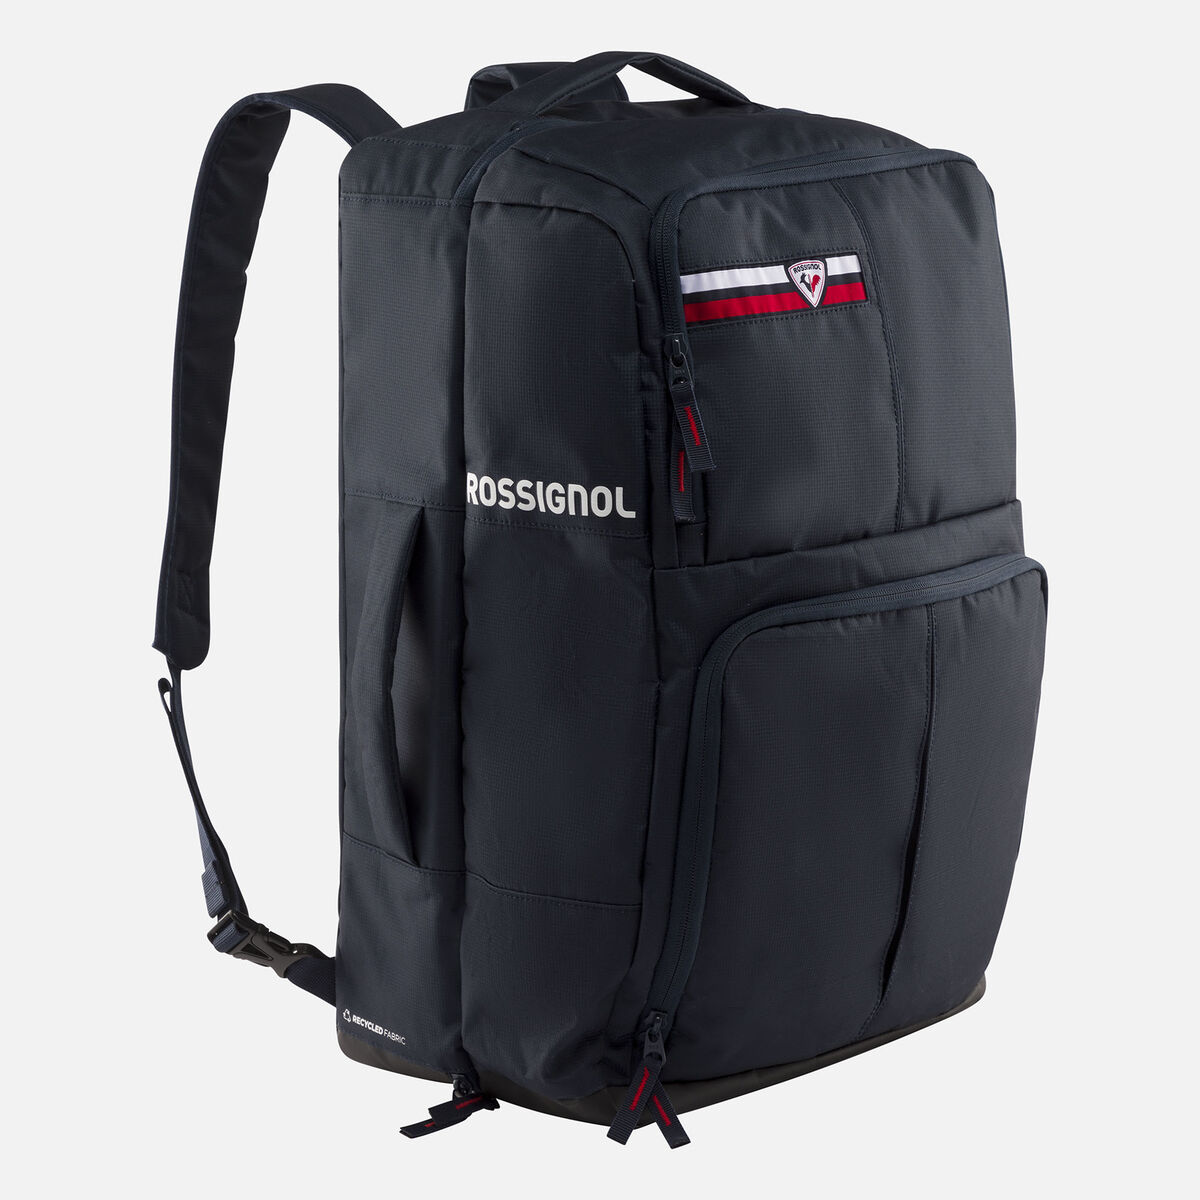 Snowboard bag Wheelie SKI padded board ,boots ,gear travel bag backpack NEW